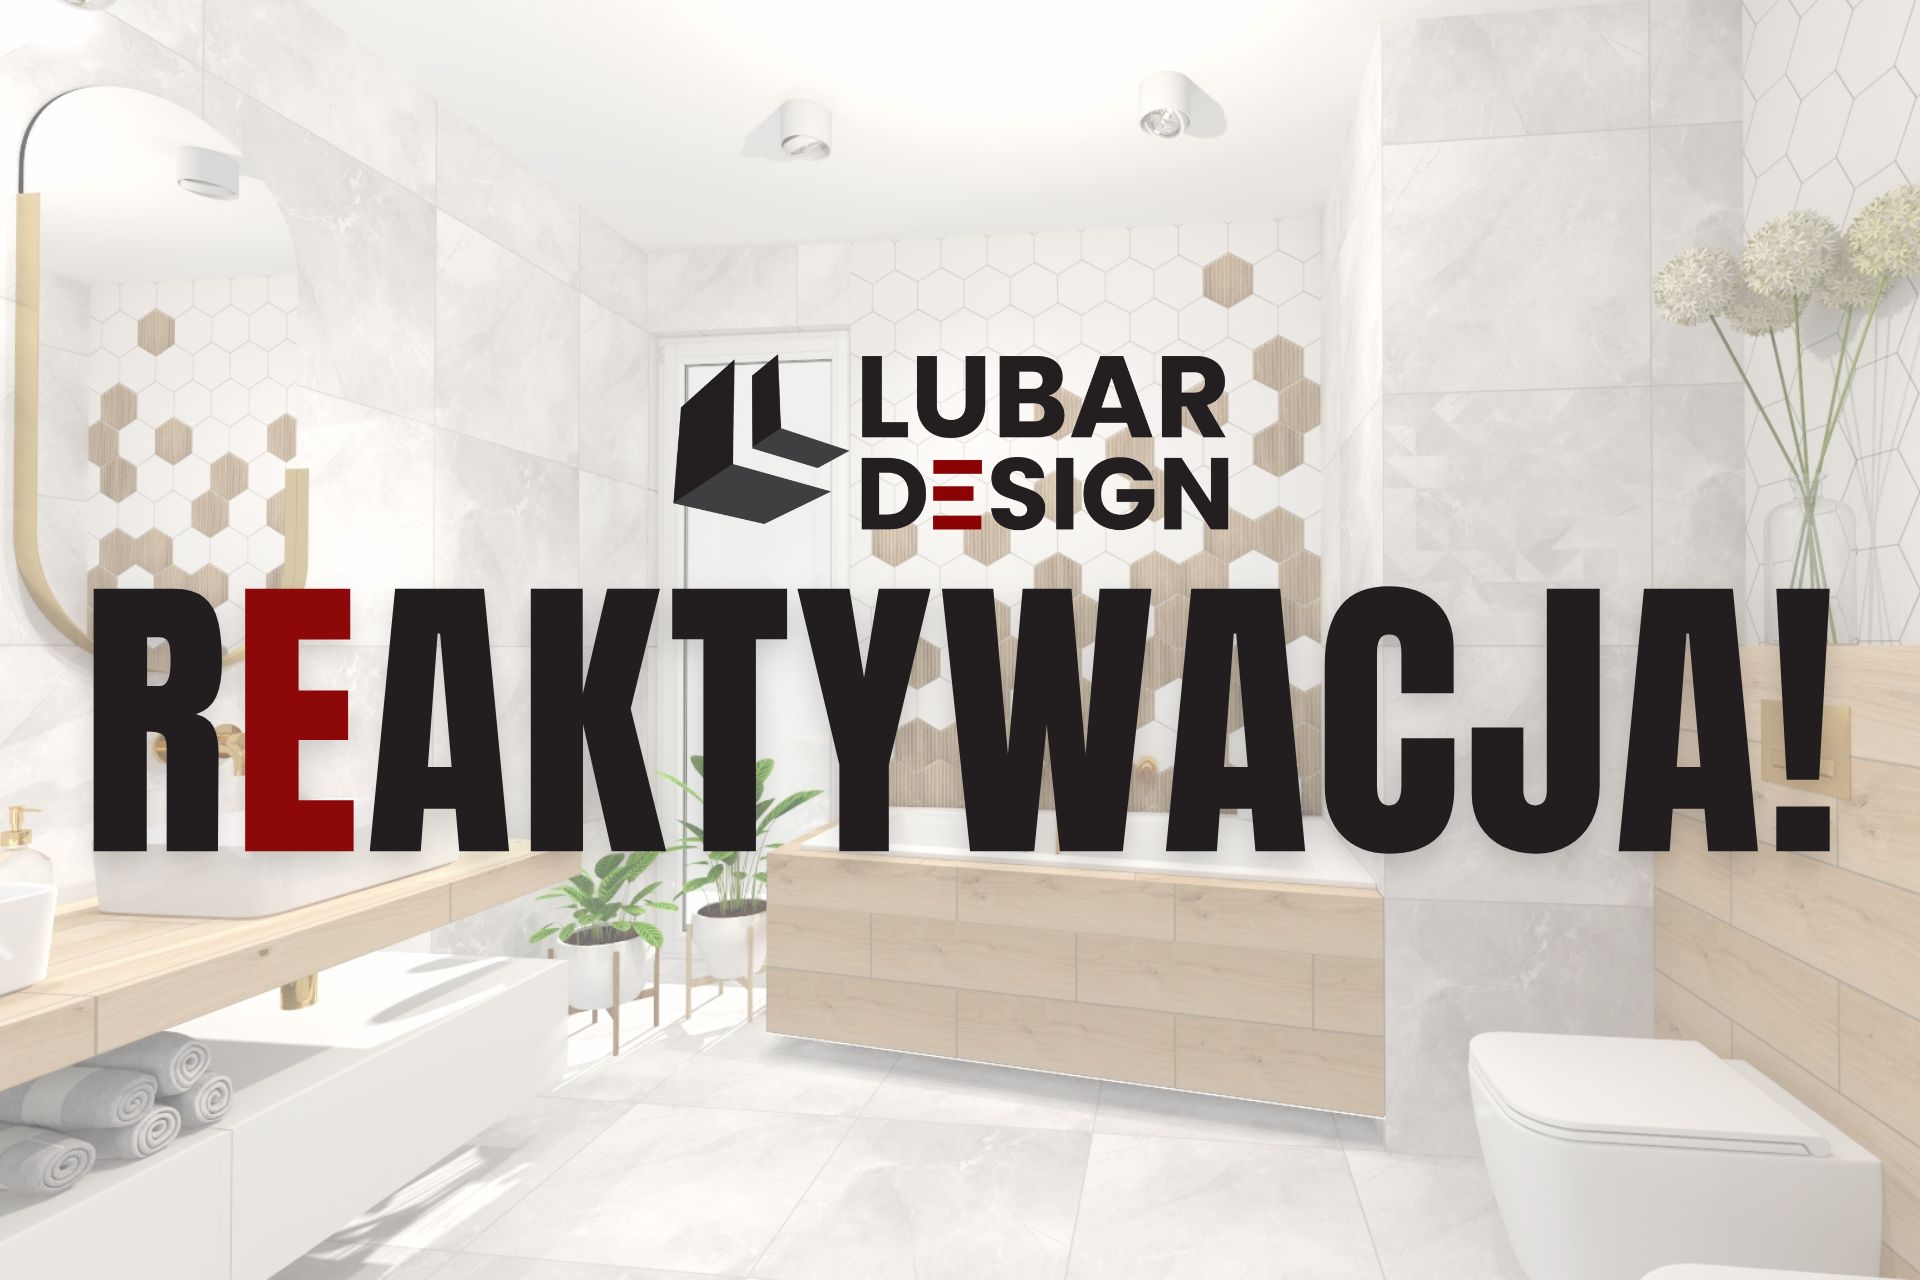 Lubar Design reaktywacja - fanpage na Facebooku